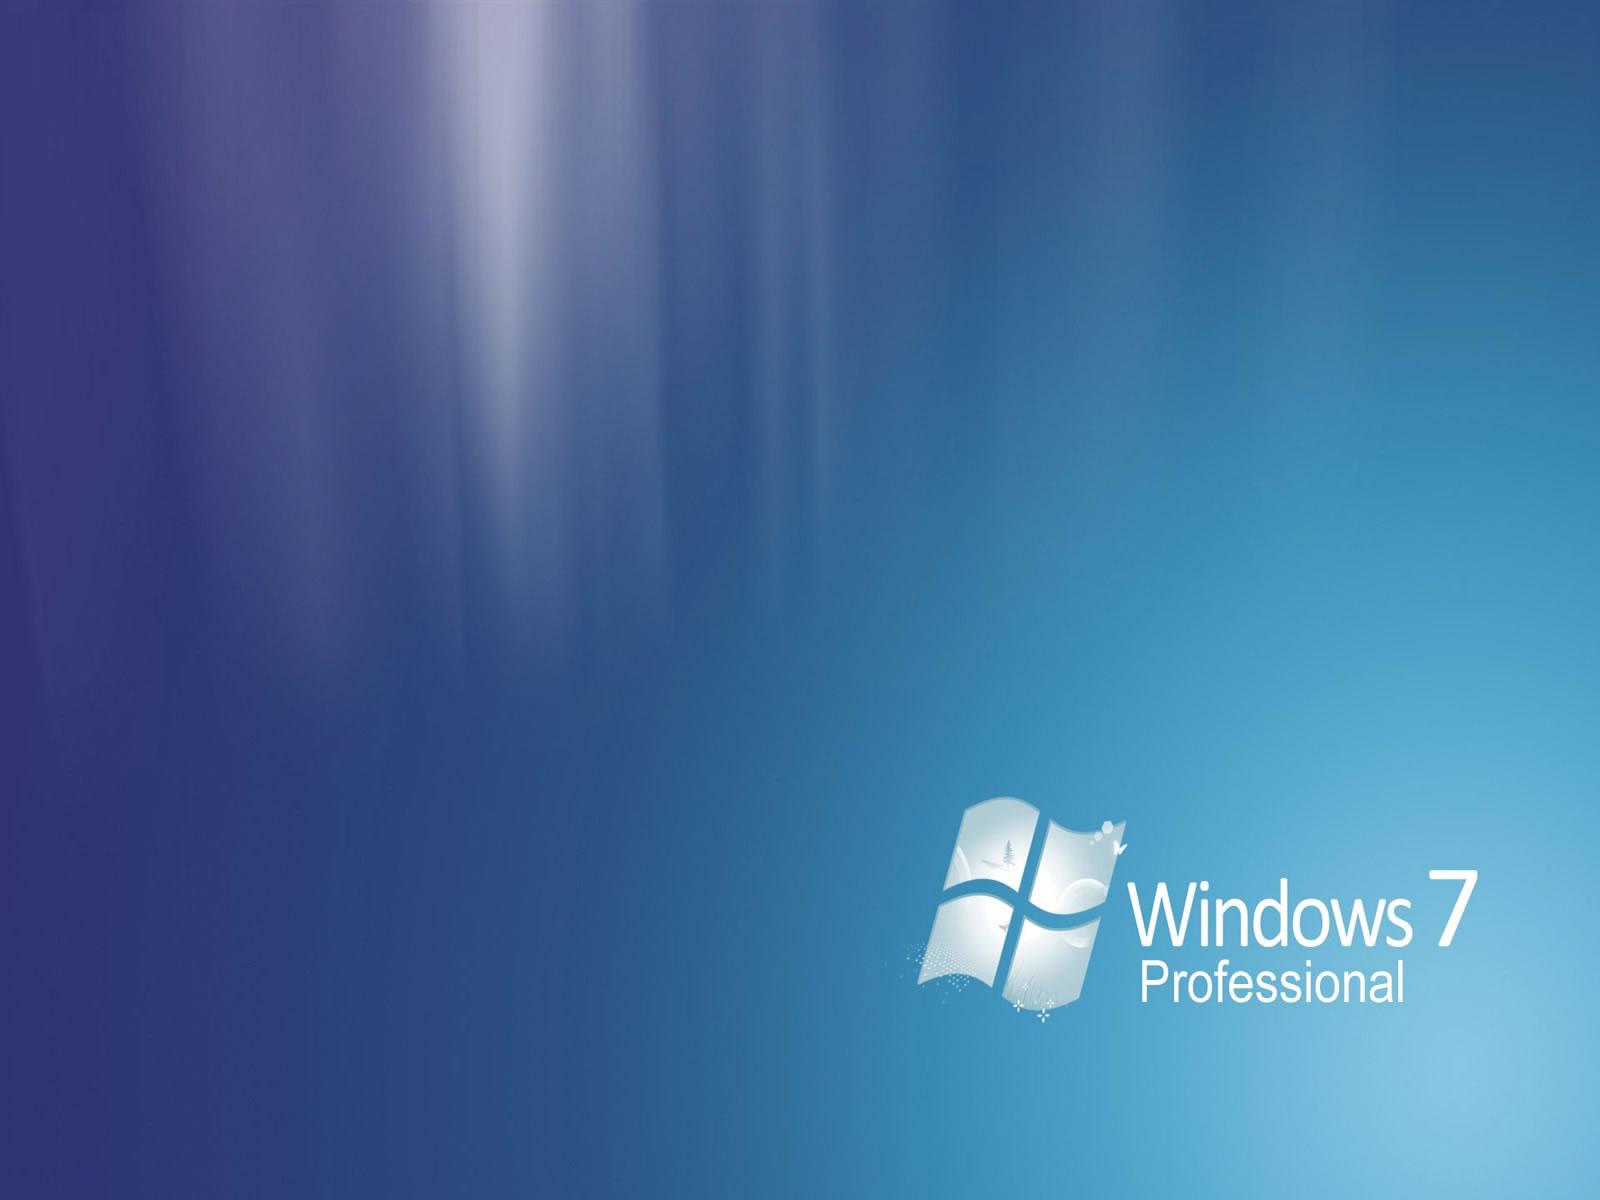 Windows Professional Wallpaper